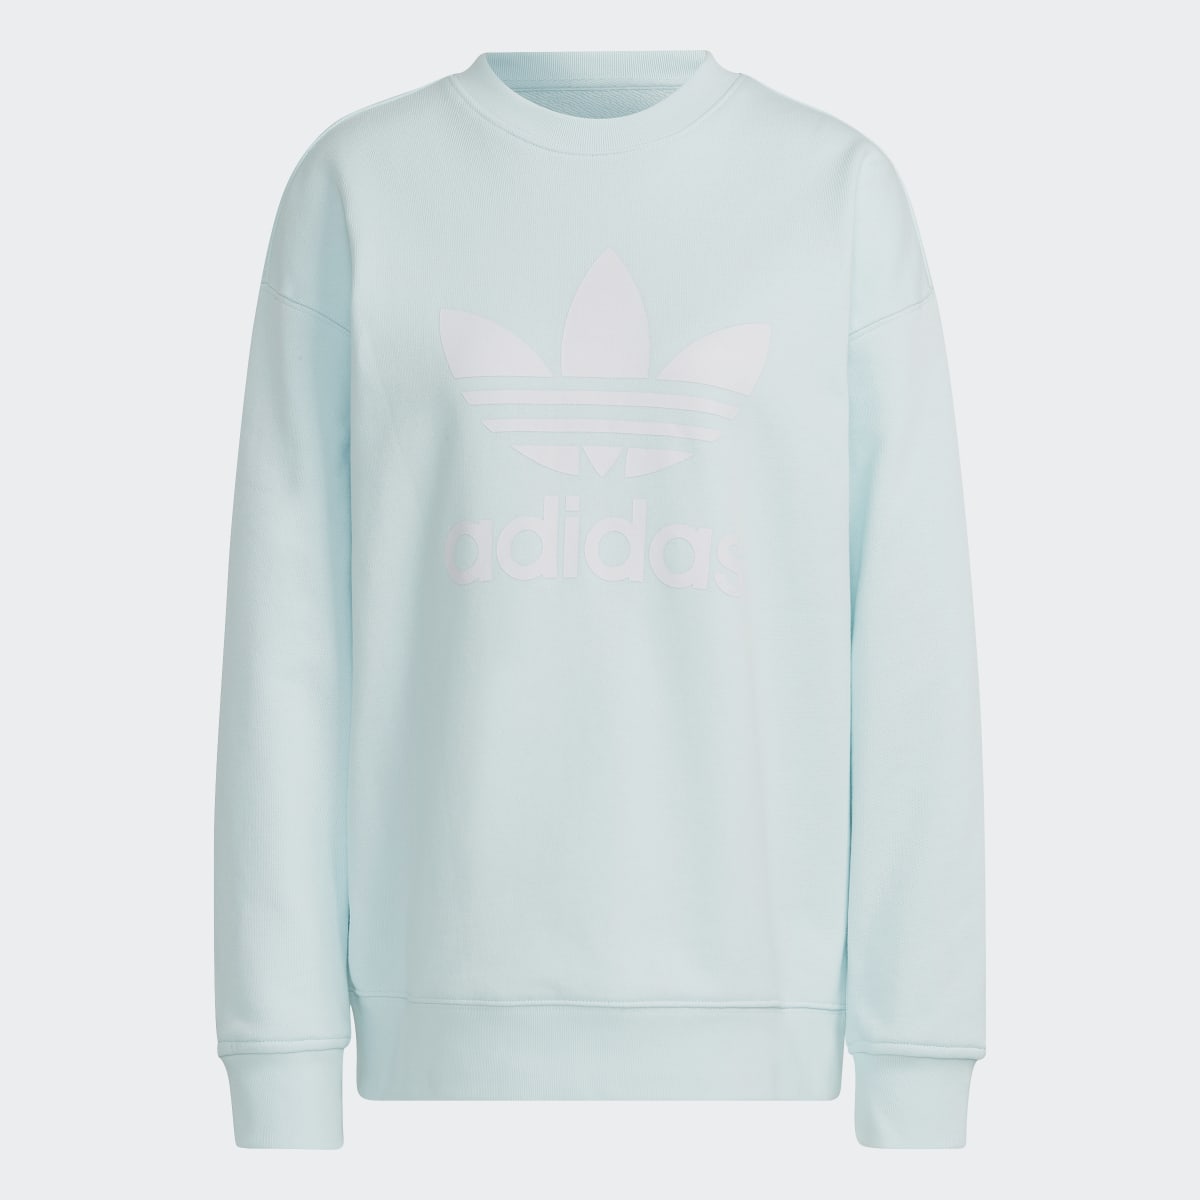 Adidas Trefoil Crew Sweatshirt. 5